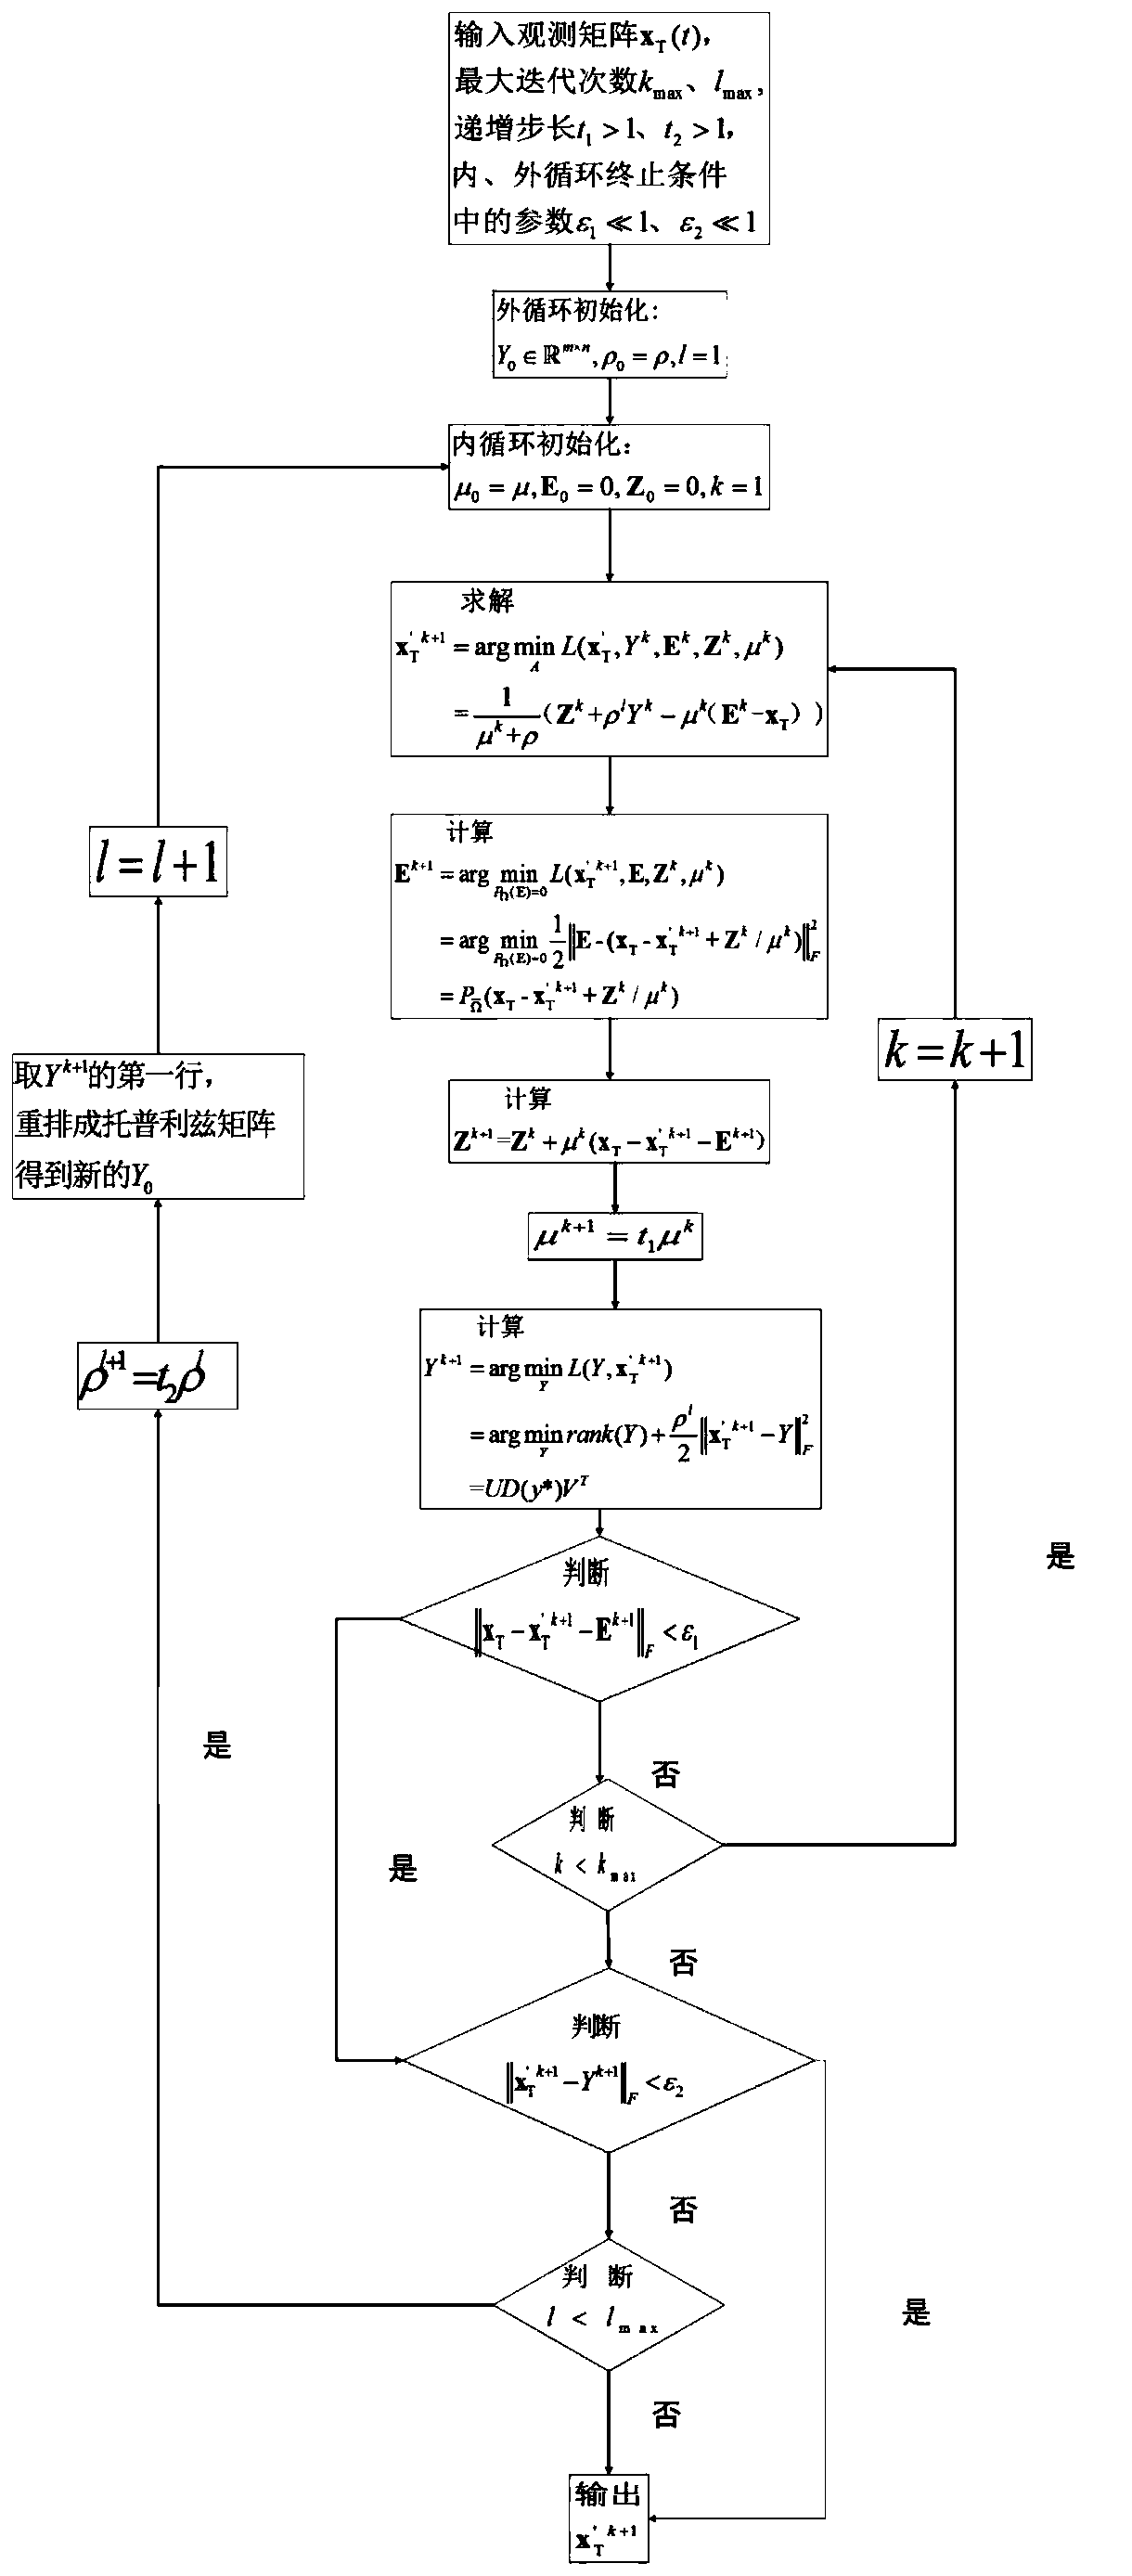 Sparse array DOA estimation method based on PD-ALM algorithm